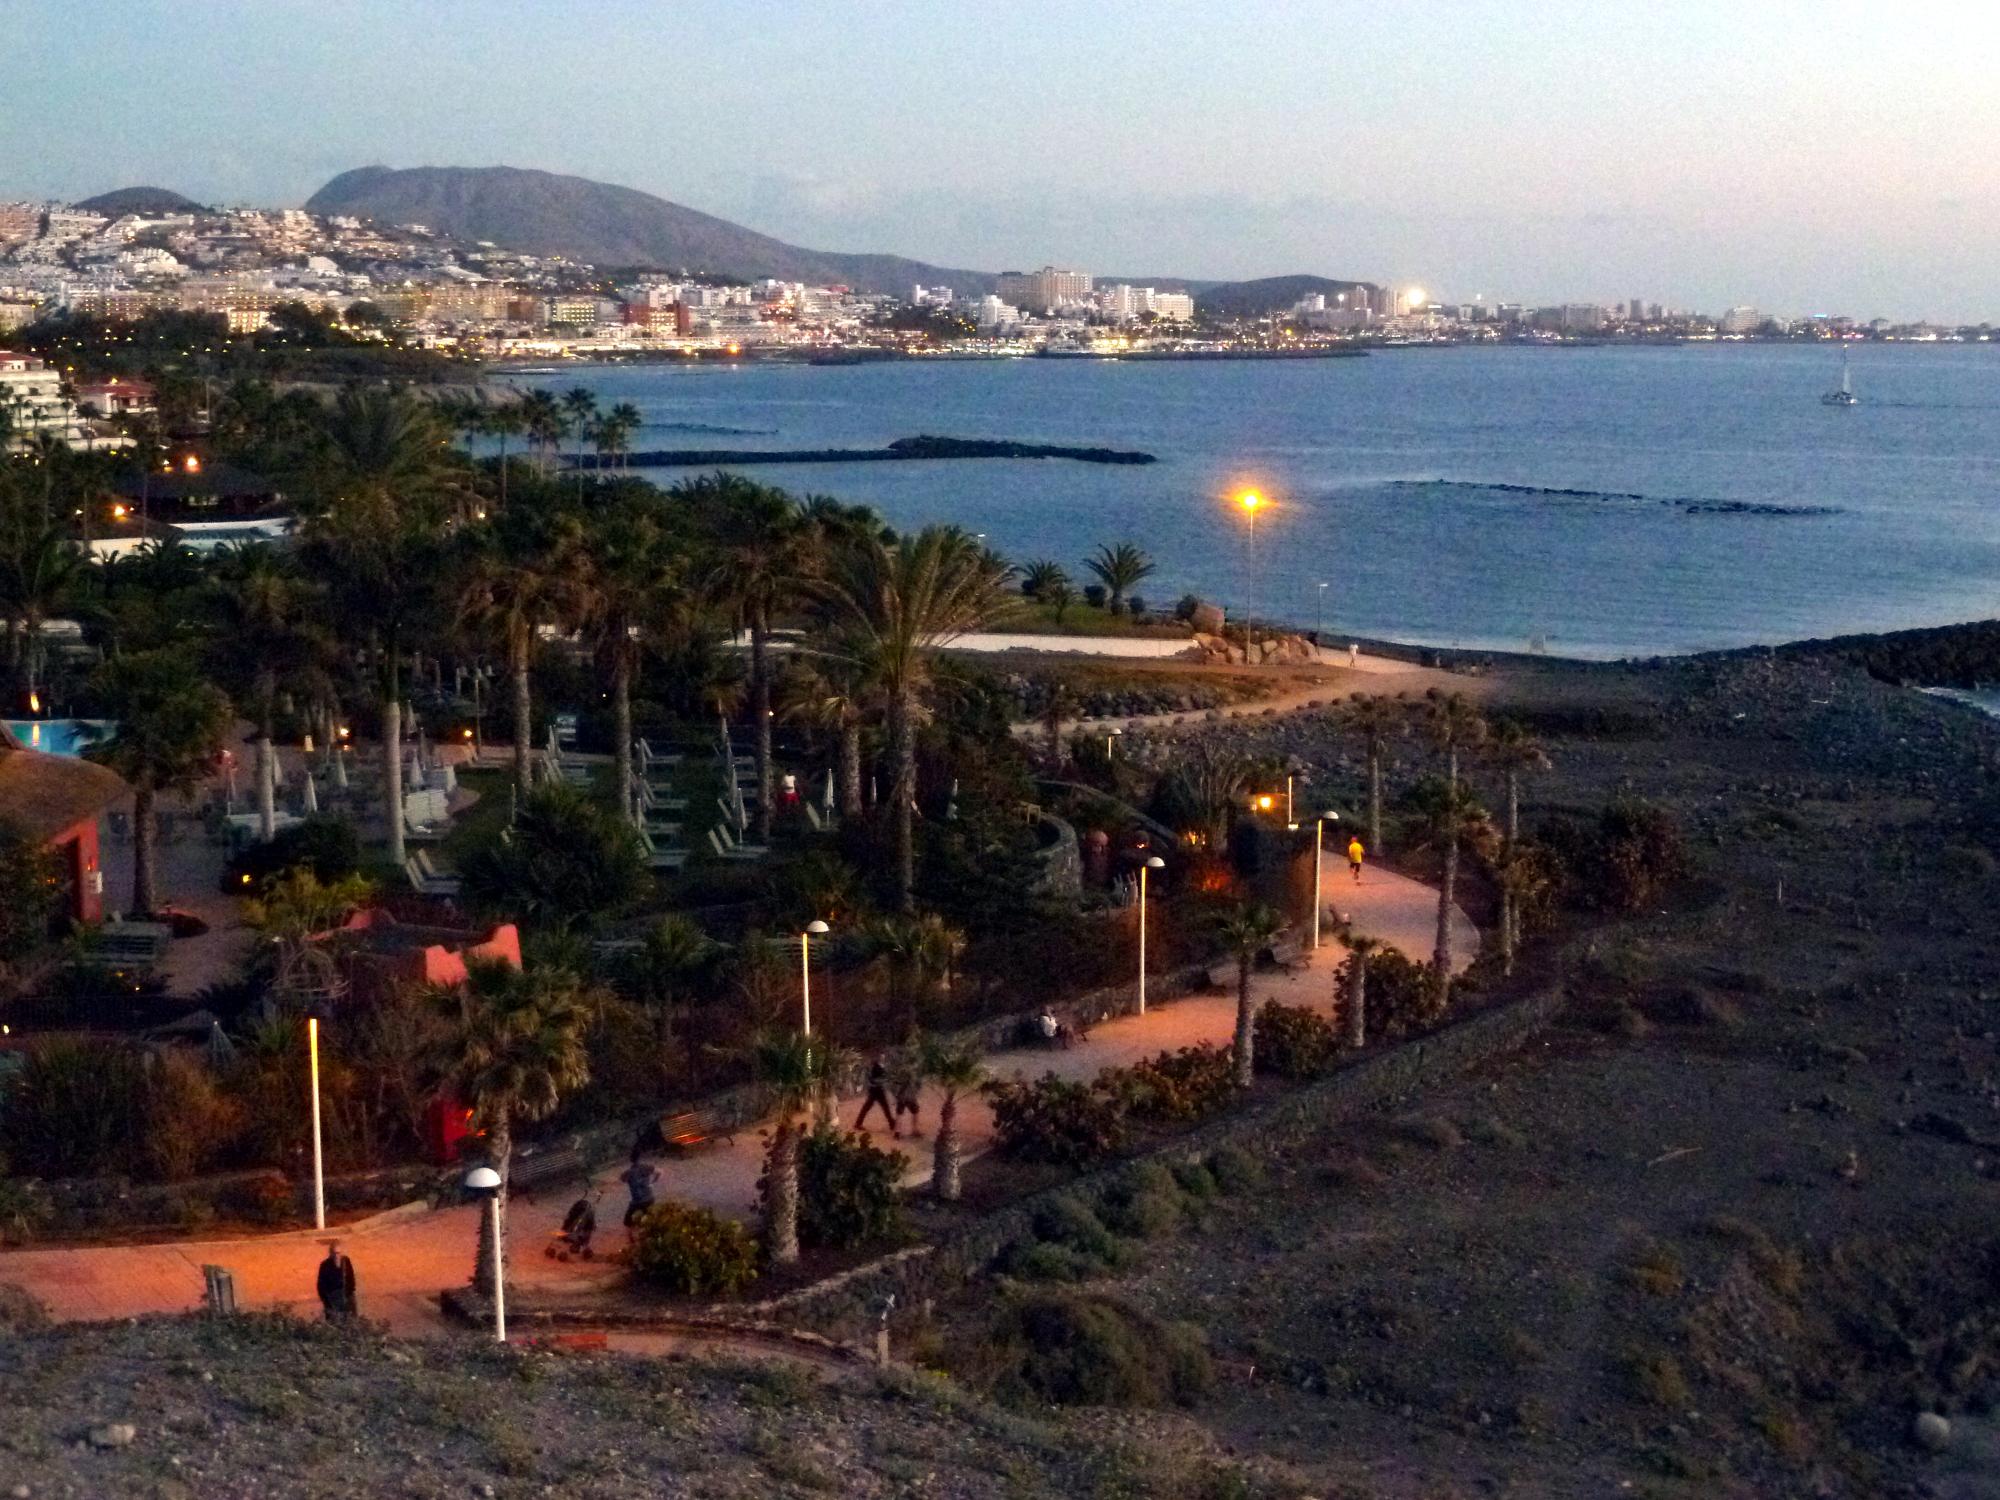  Canary Islands - Callao De Fanabe